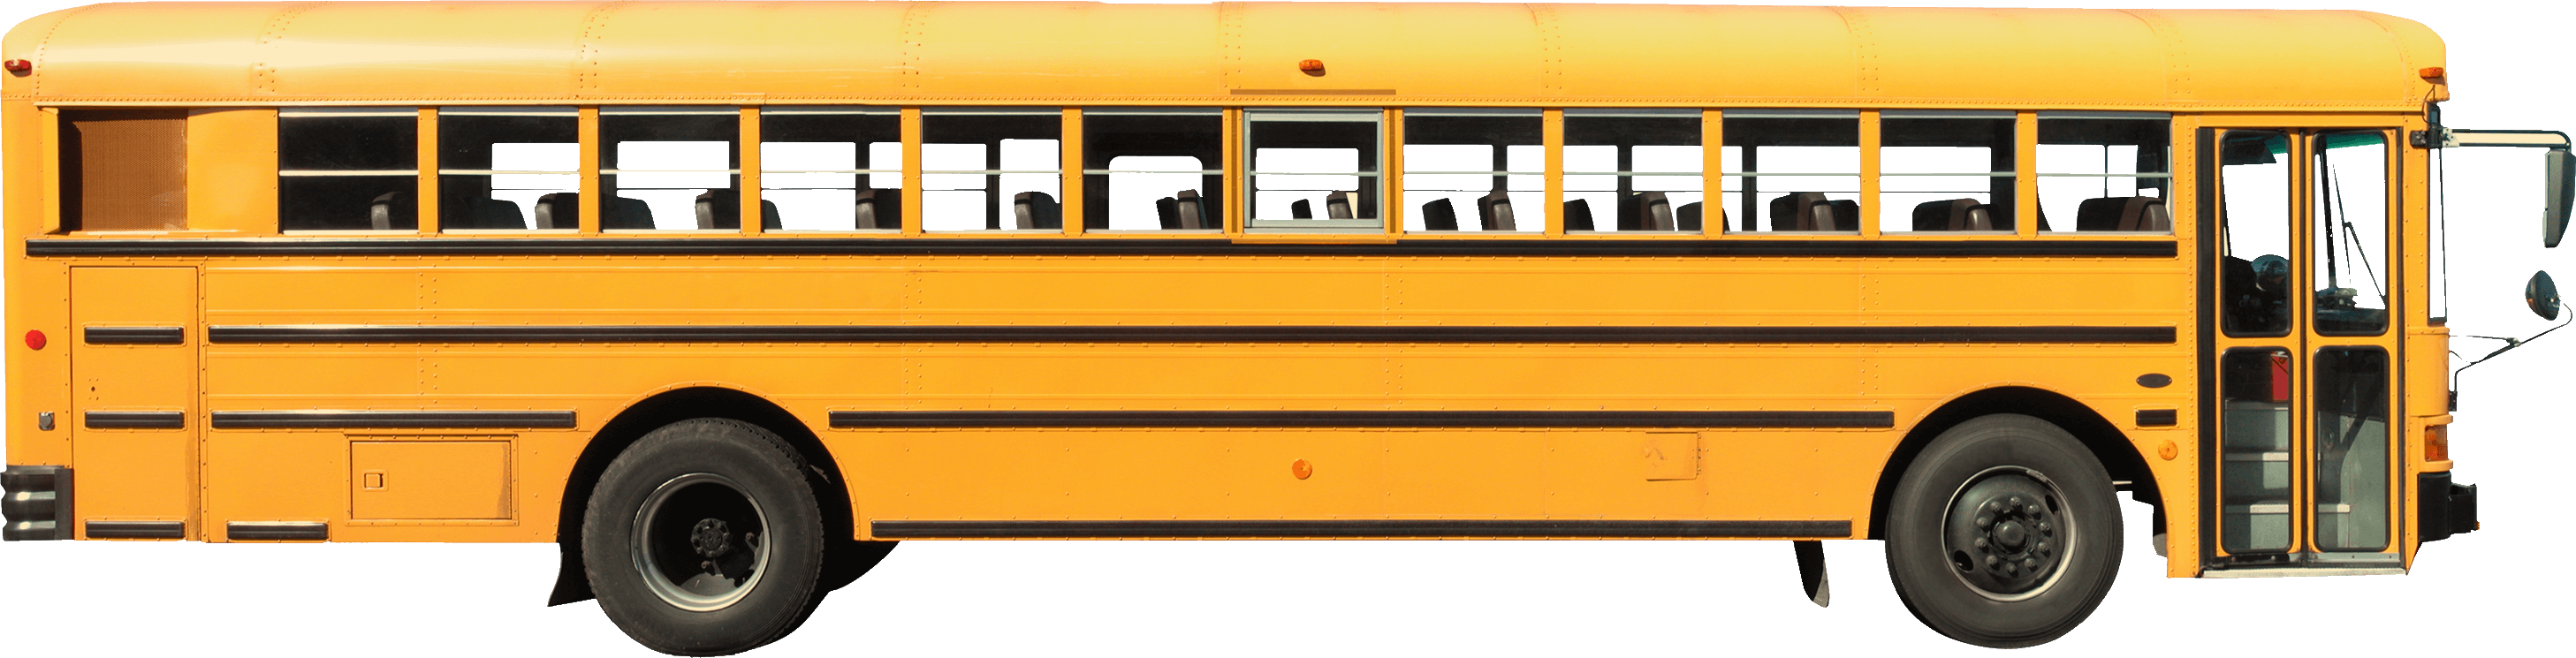 Picture Of School Bus - School Bus (2915x745)